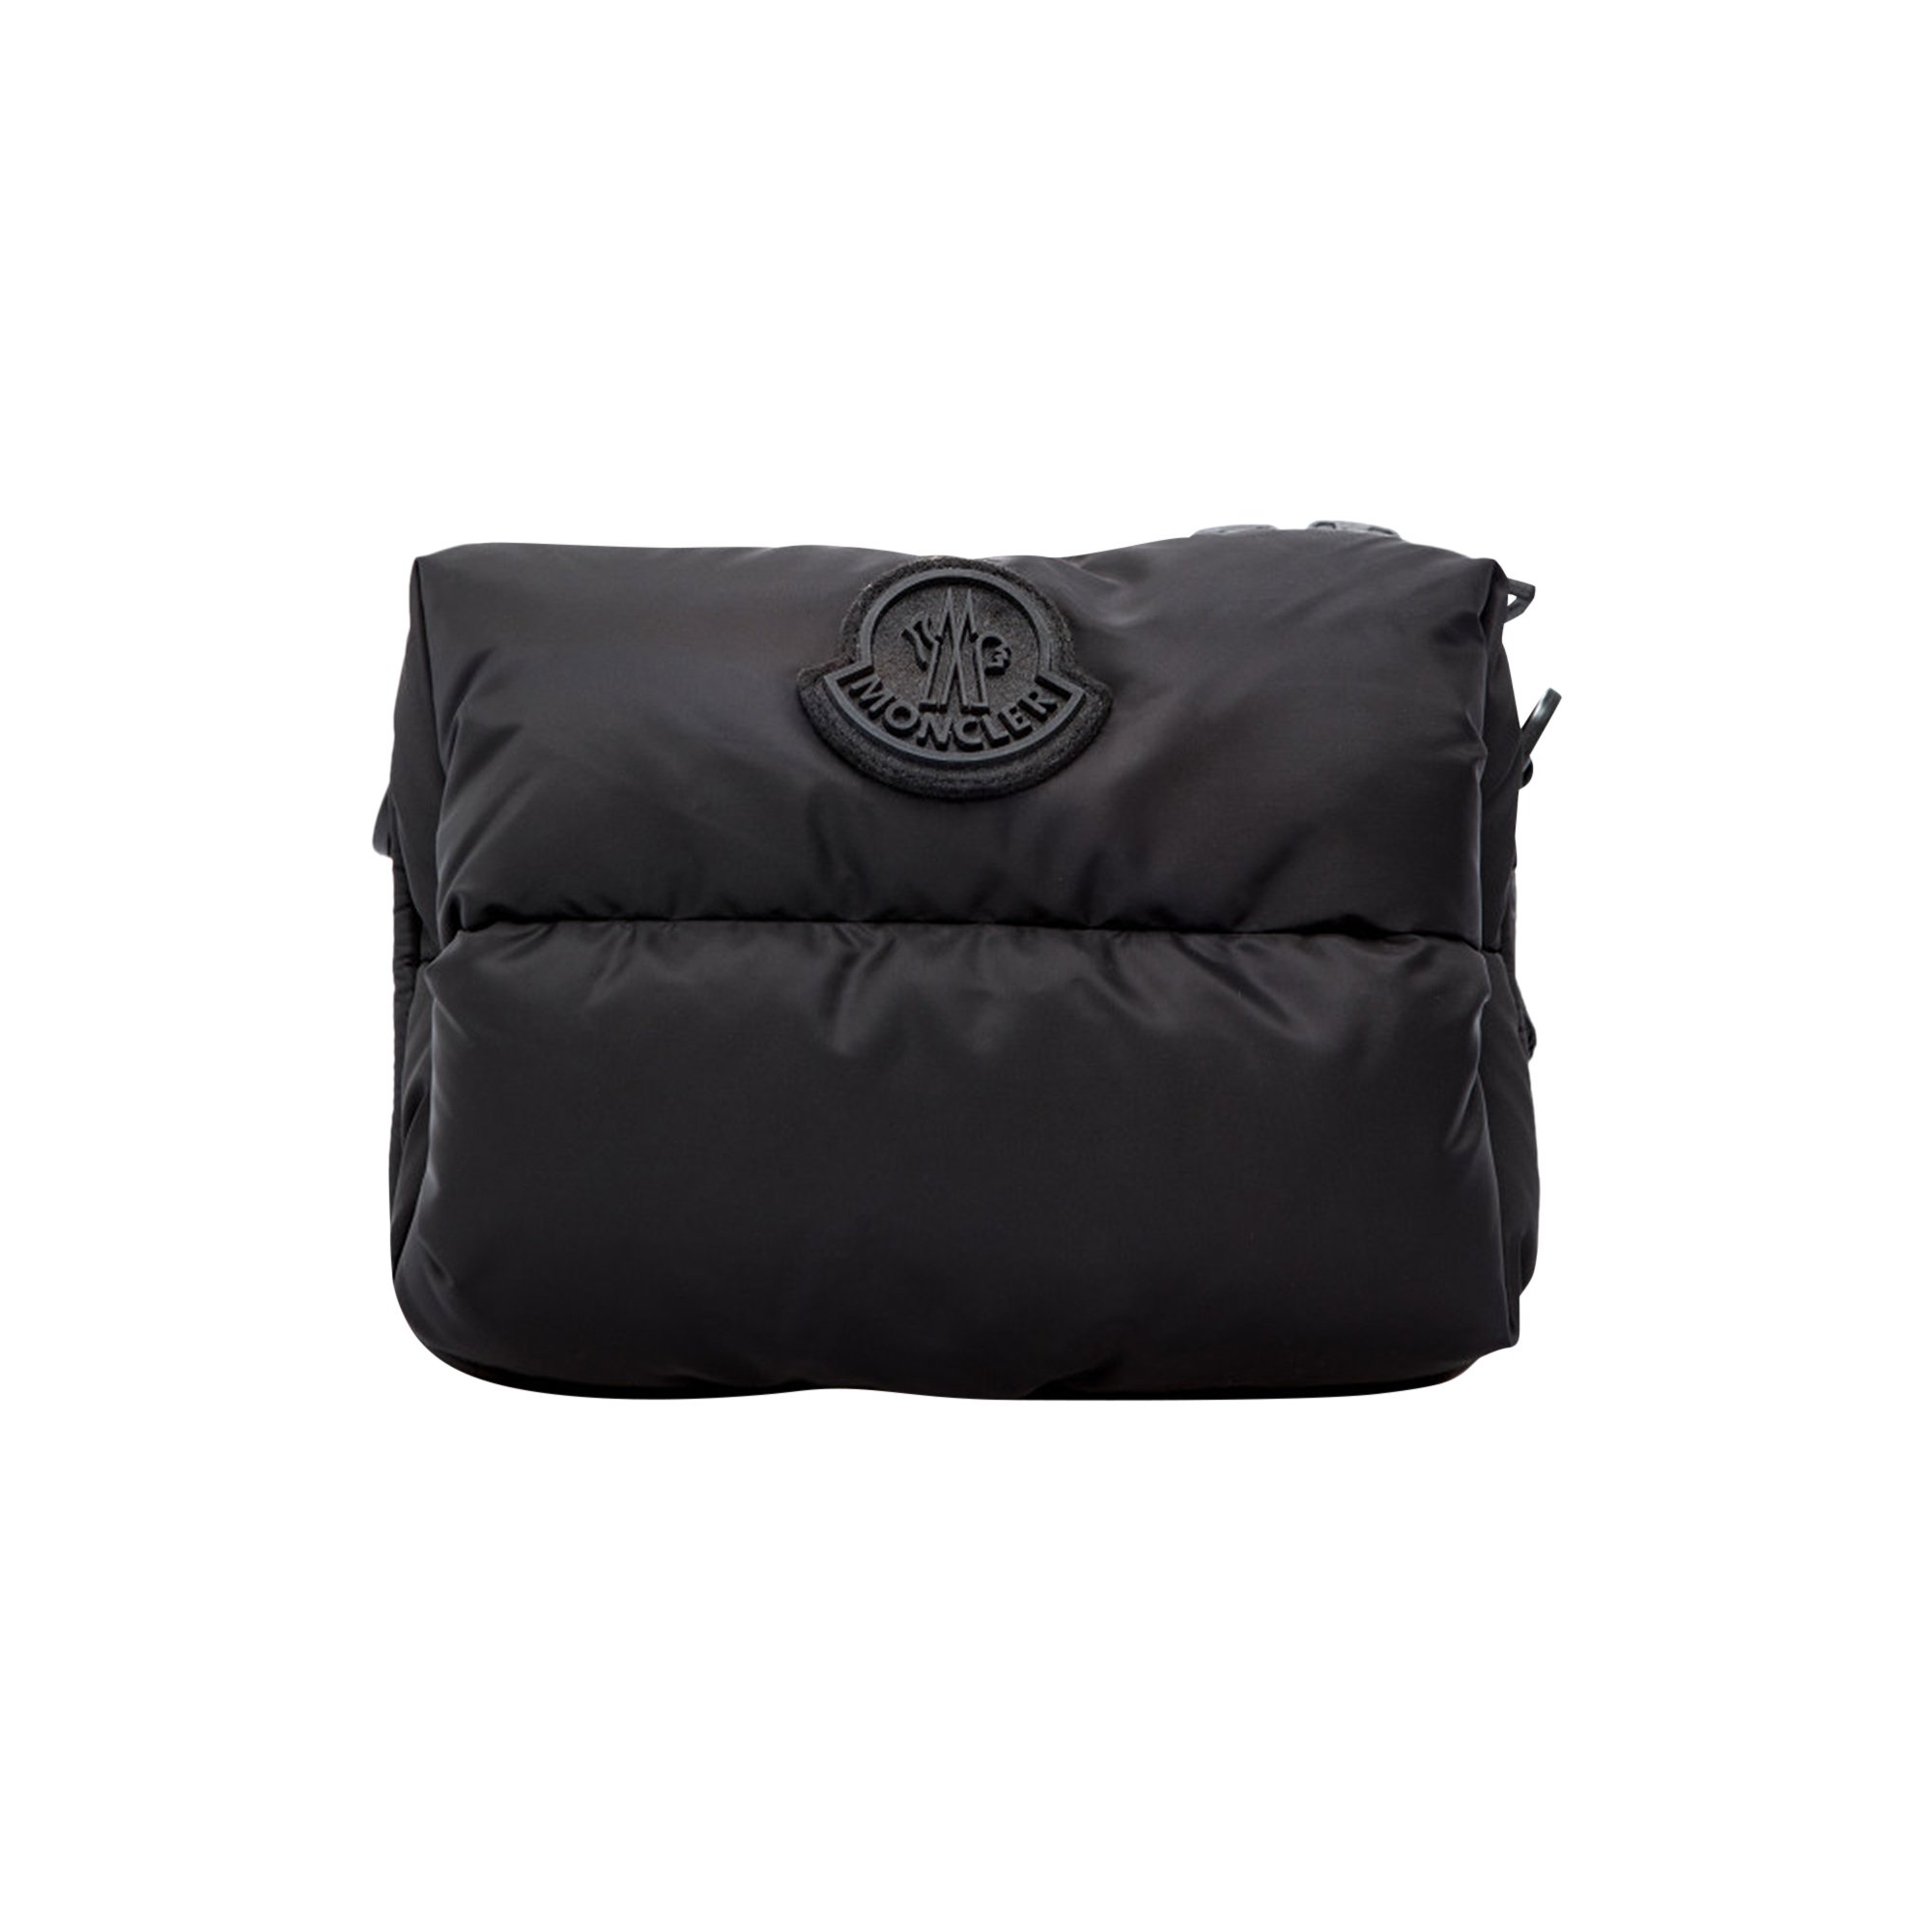 Buy Moncler Legere Cross Body Bag 'Black' - 5L510 00 02SZS 999 | GOAT